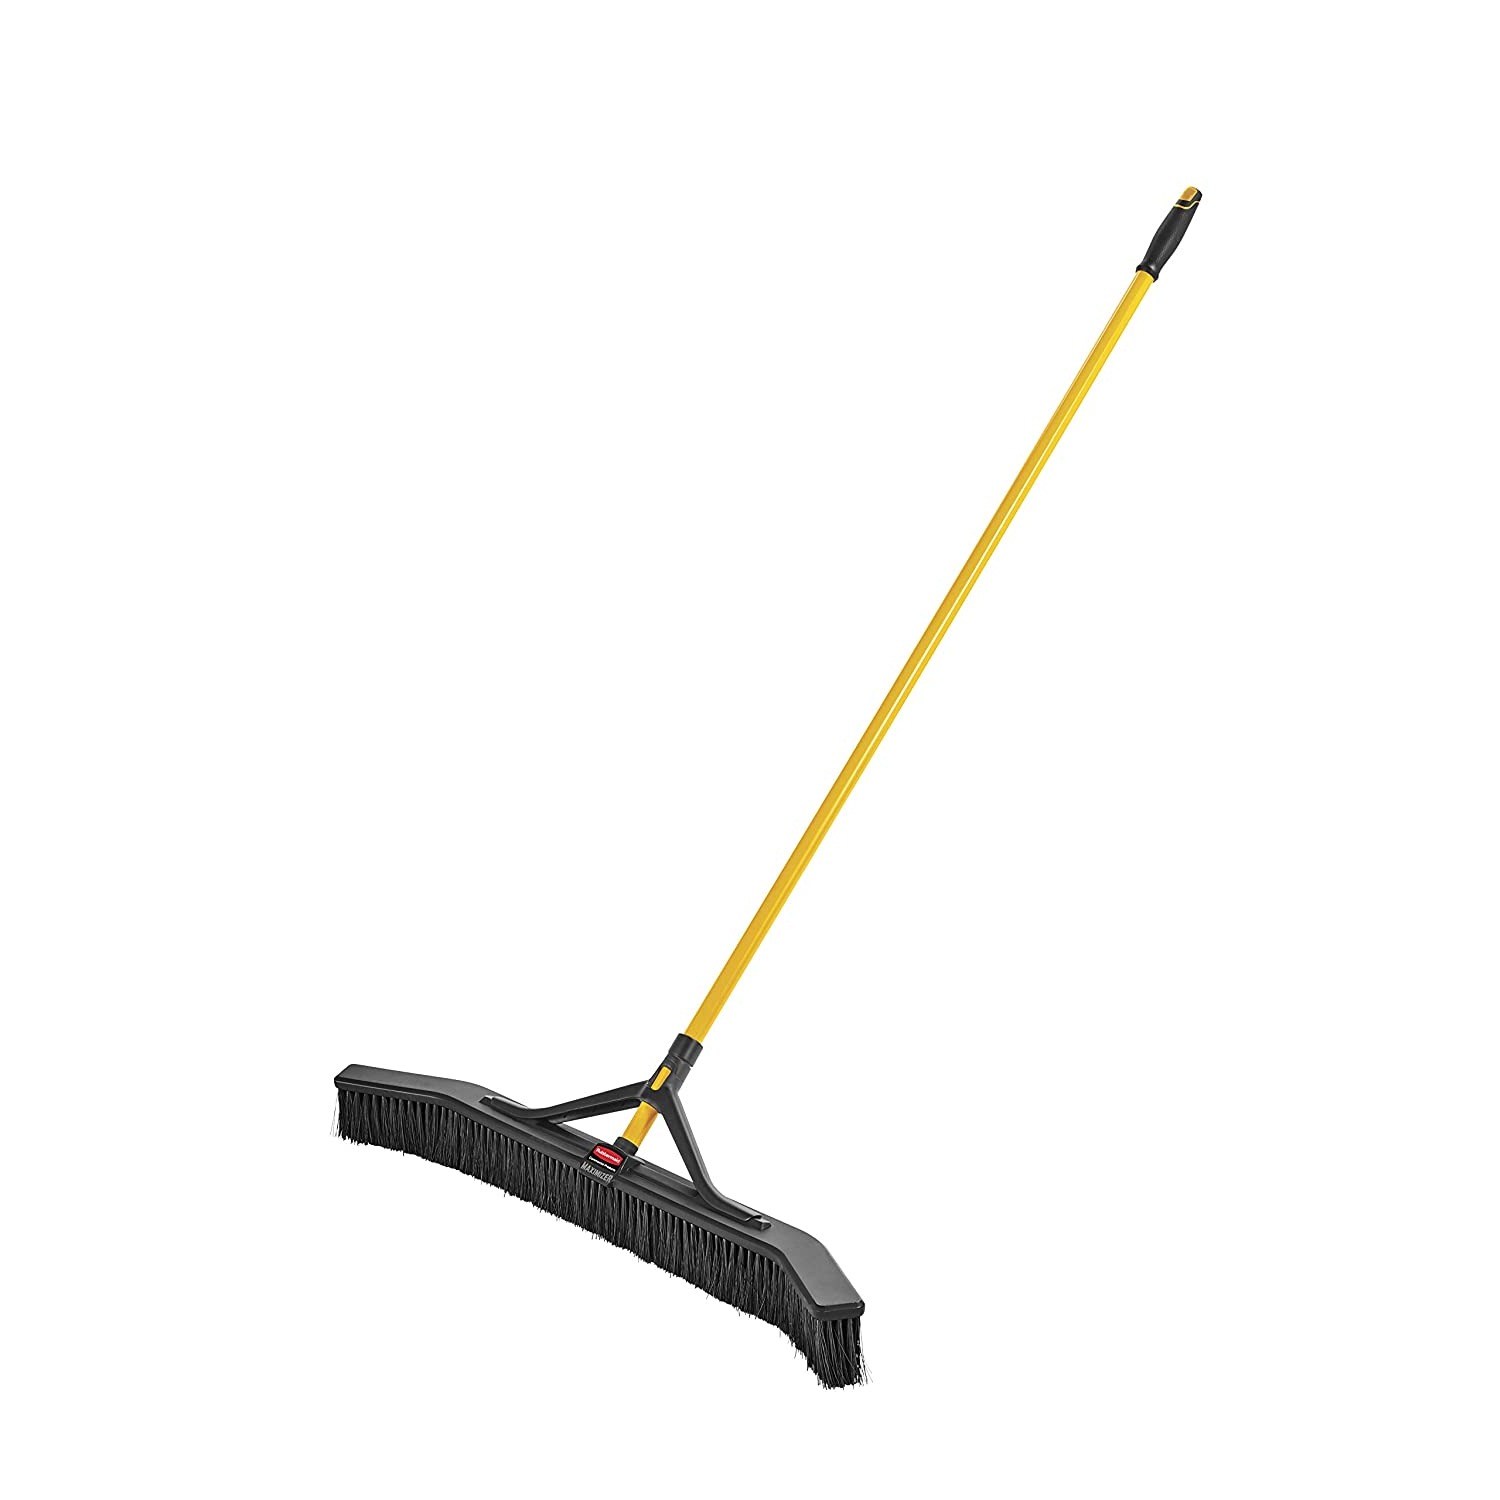 https://cdn.bestreviews.com/images/v4desktop/product-matrix/rubbermaid-push-to-center-broom.jpg